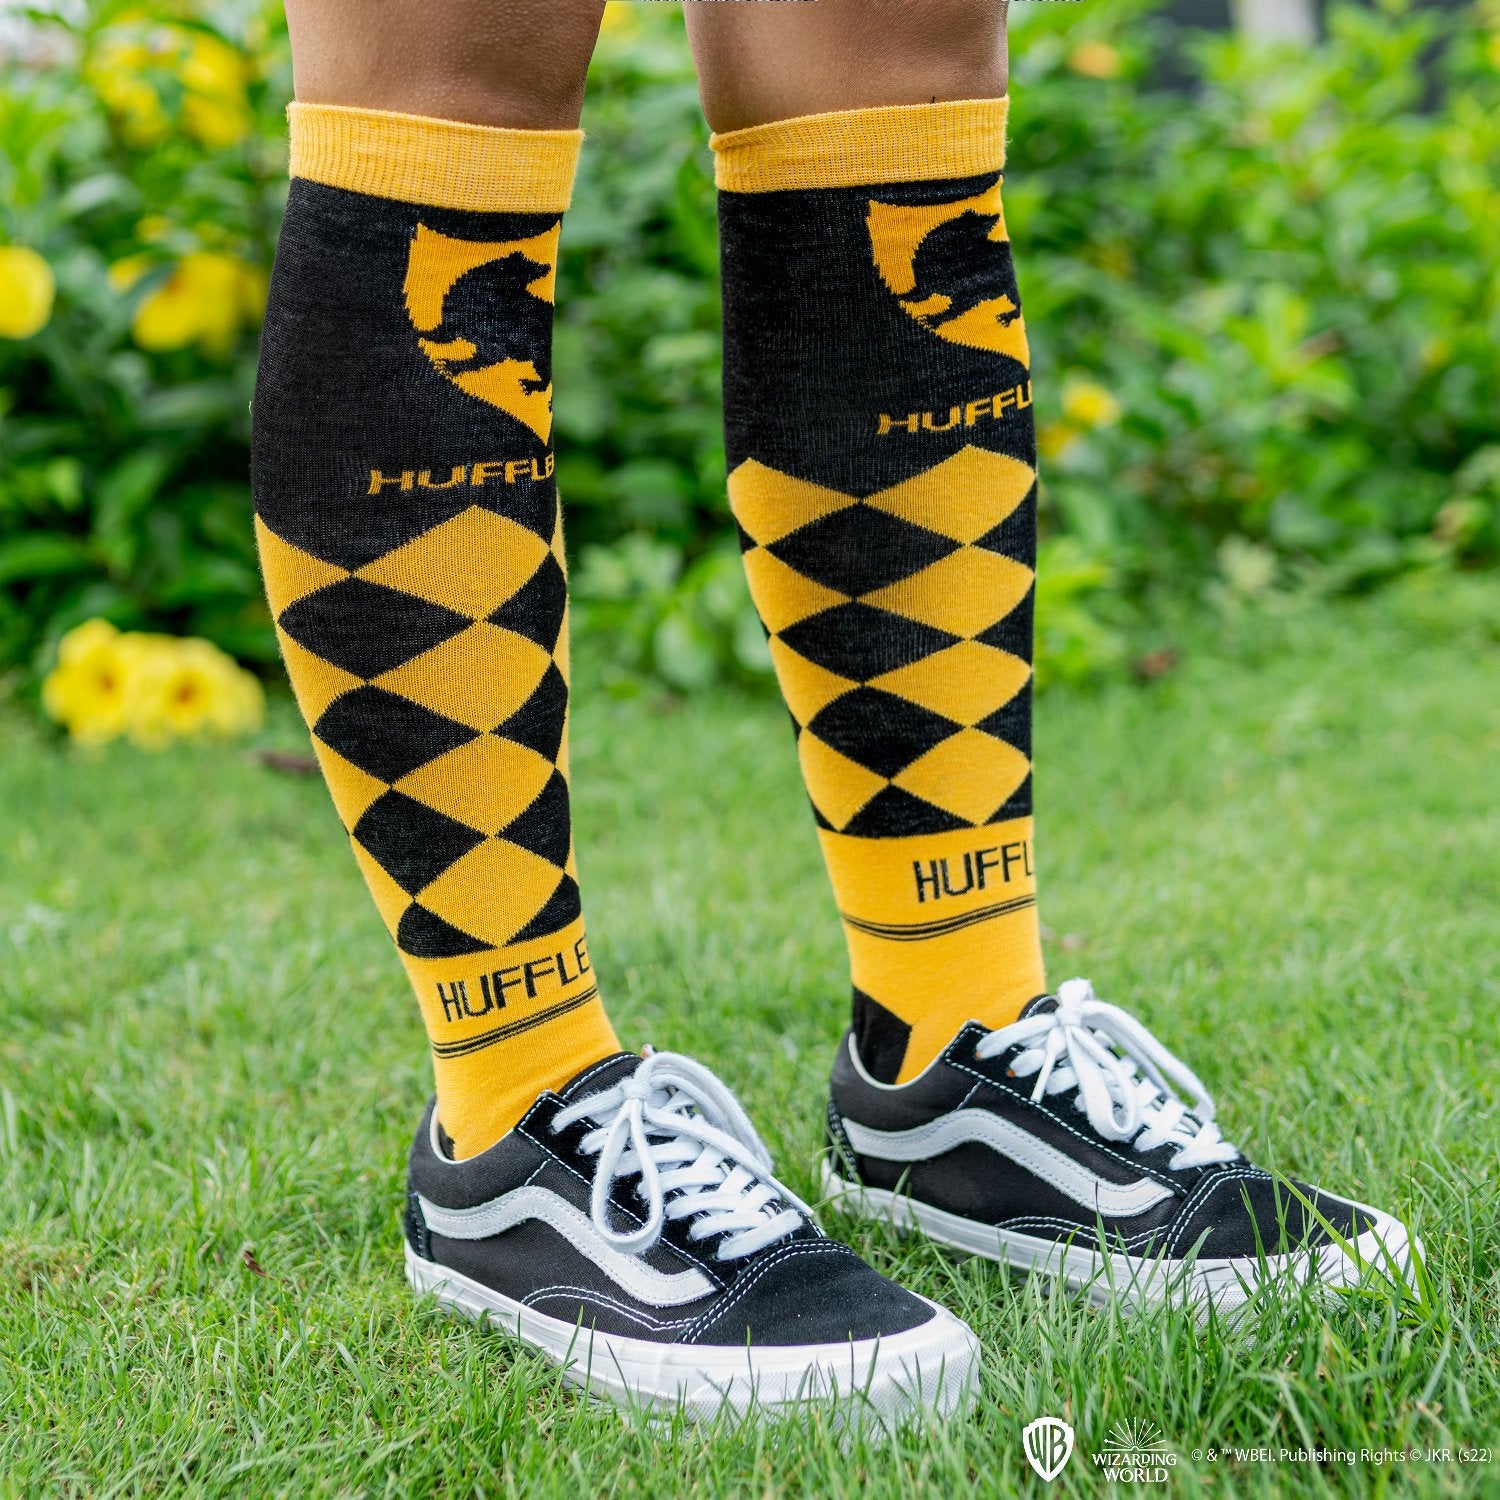  Harry Potter: Hufflepuff Knee High Socks Set of 3  4895205609235